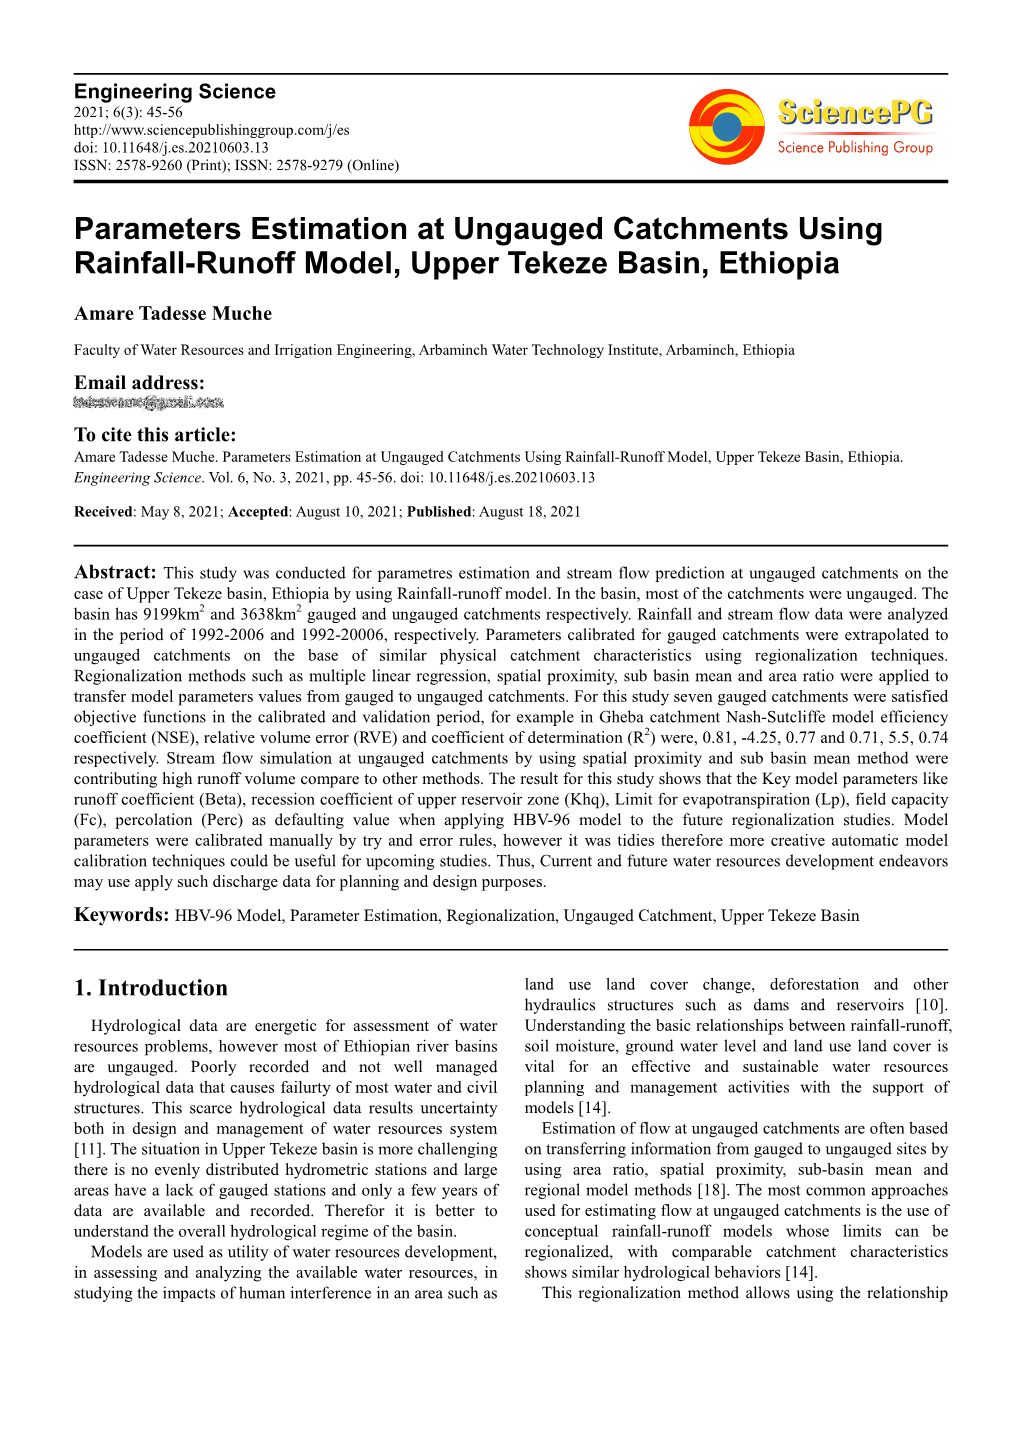 Parameters Estimation at Ungauged Catchments Using Rainfall-Runoff Model, Upper Tekeze Basin, Ethiopia